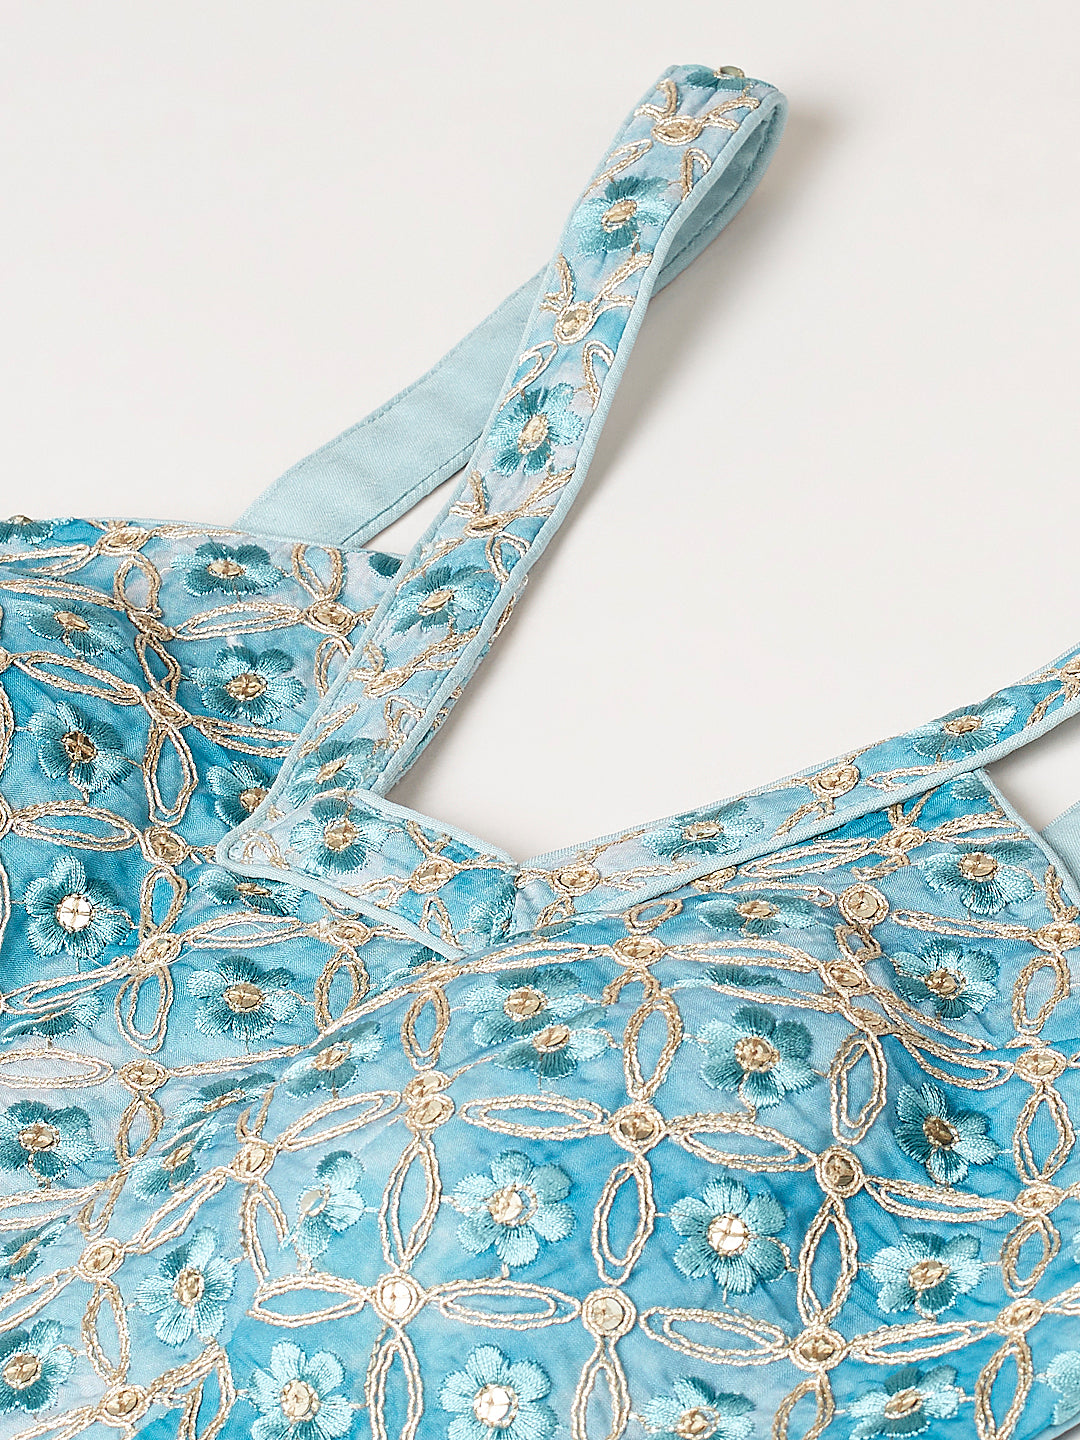 Women's Turquoise Blue Organza Floral Printed Semi-Stitched Lehenga Choli & Dupatta - Royal Dwells